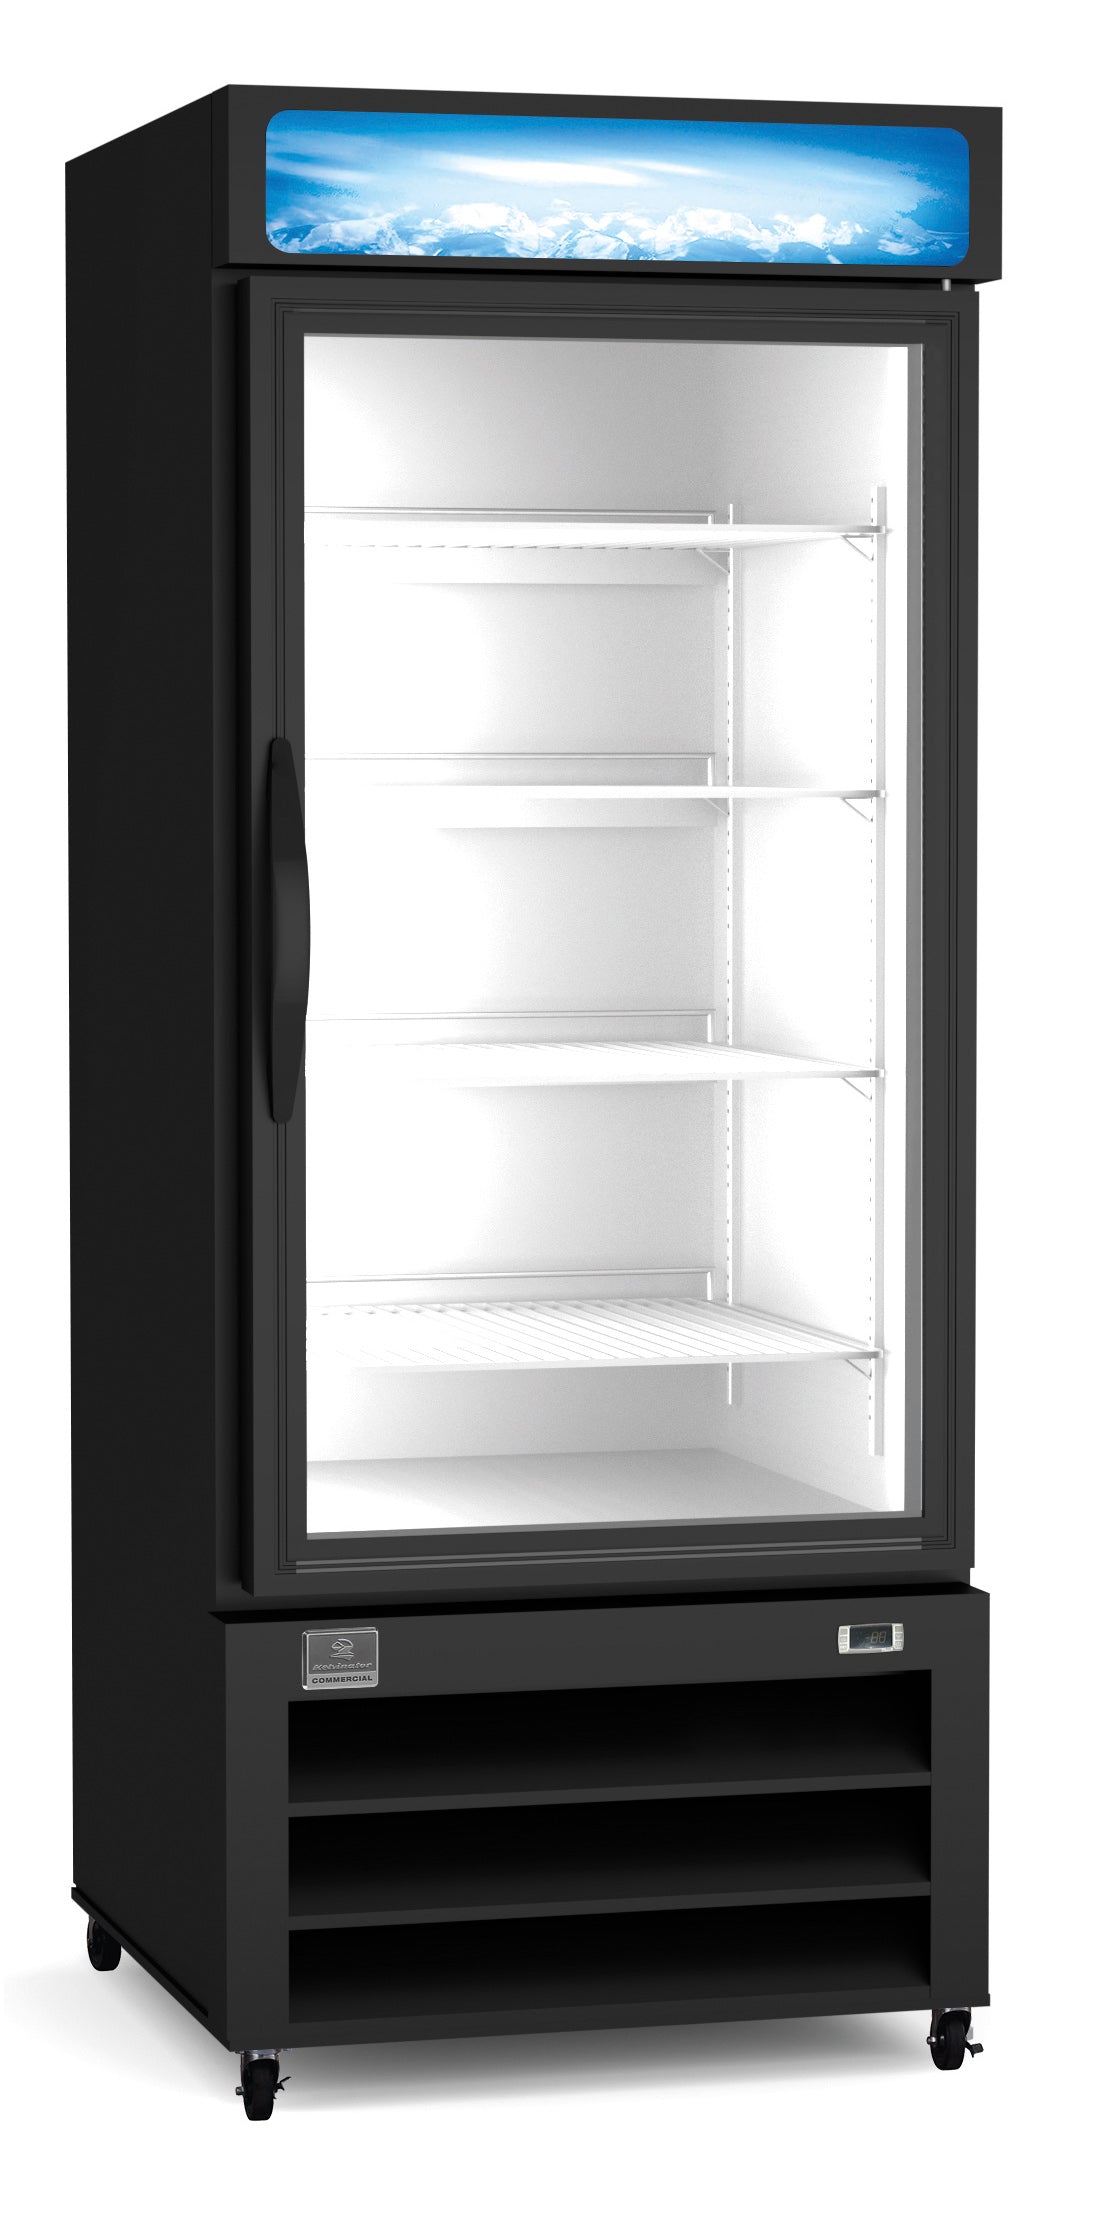 Refrigerated Merchandiser Kelvinator Commercial Model KCHGM26R